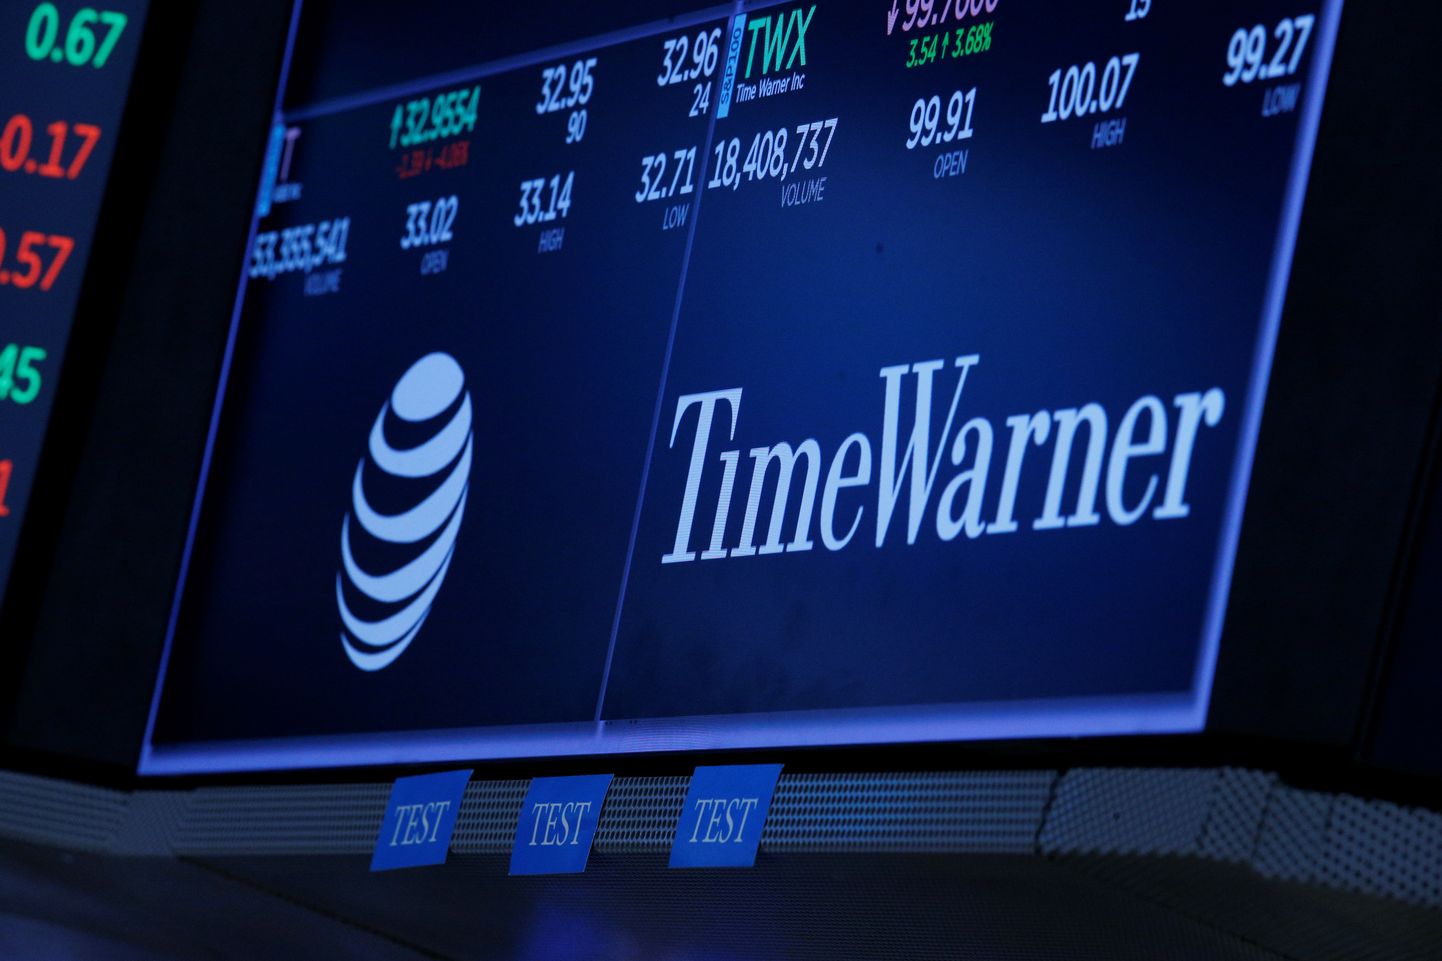 AT&T ja Time Warneri logod New Yorgi börsi monitoril.